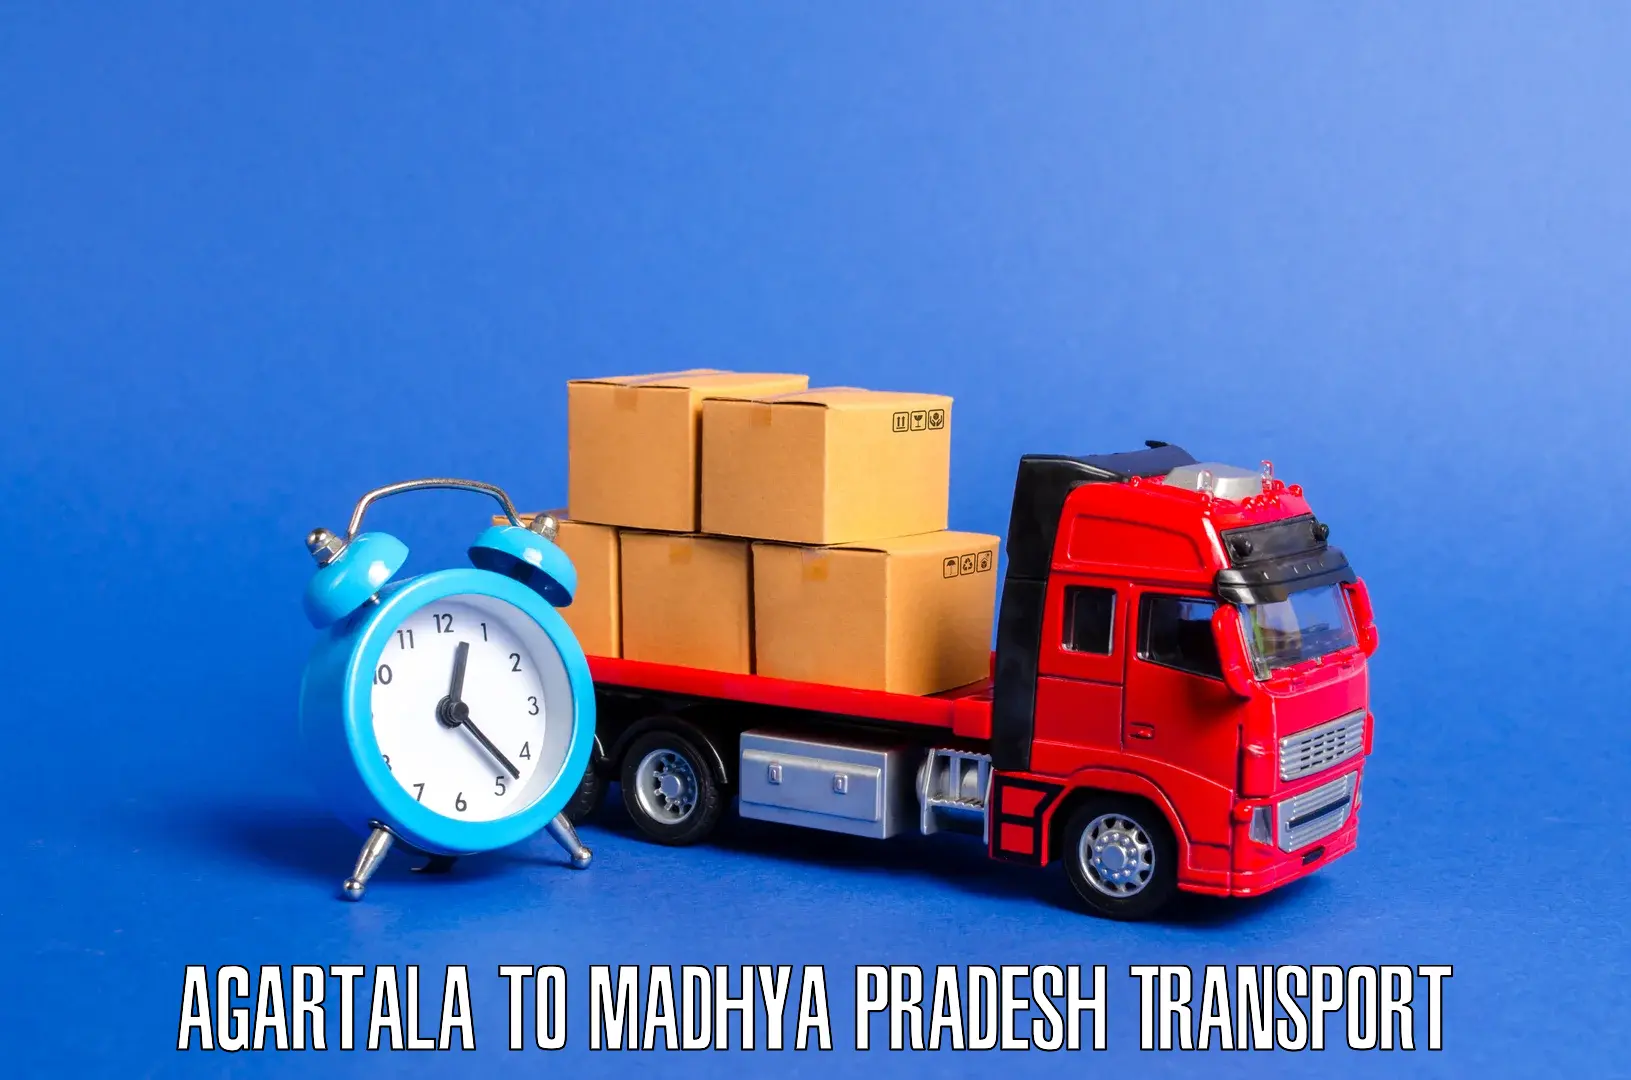 Nearby transport service Agartala to Guna